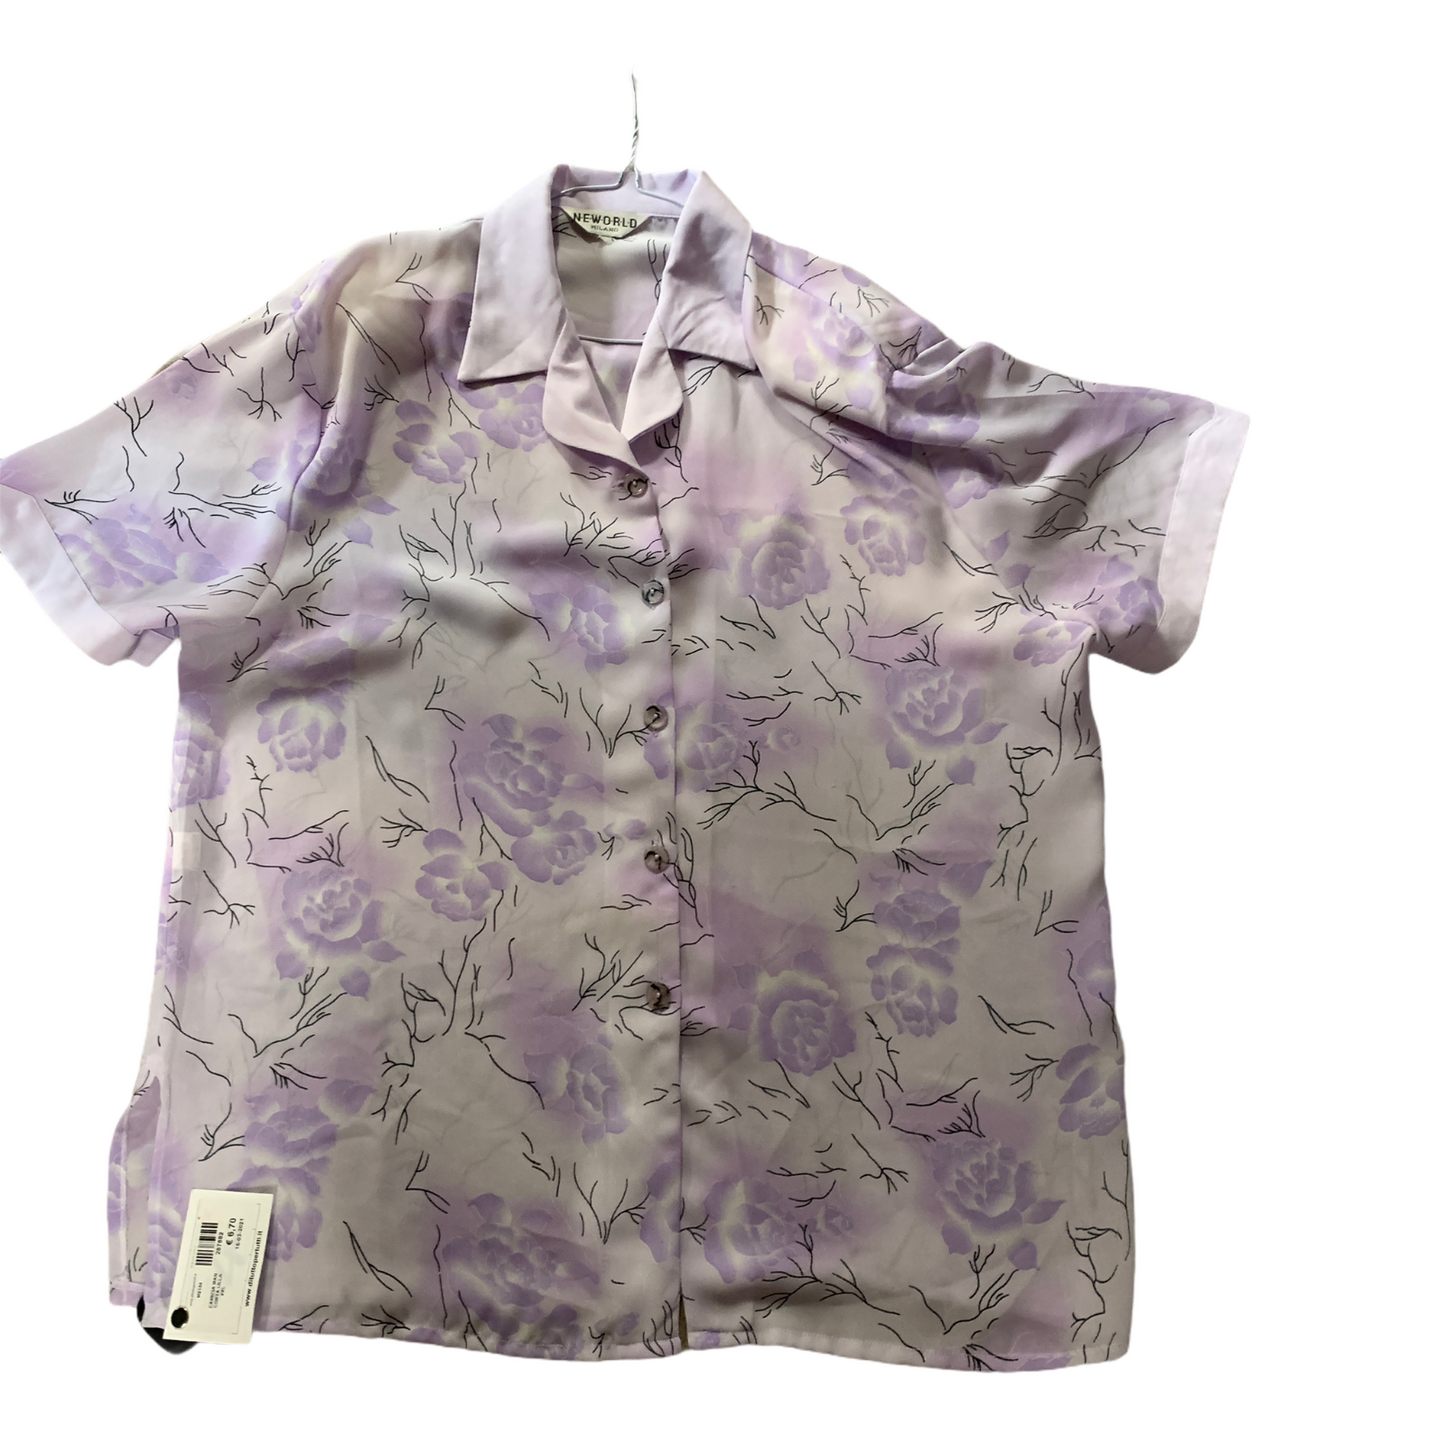 Lilac flower shirt size XL/XXL